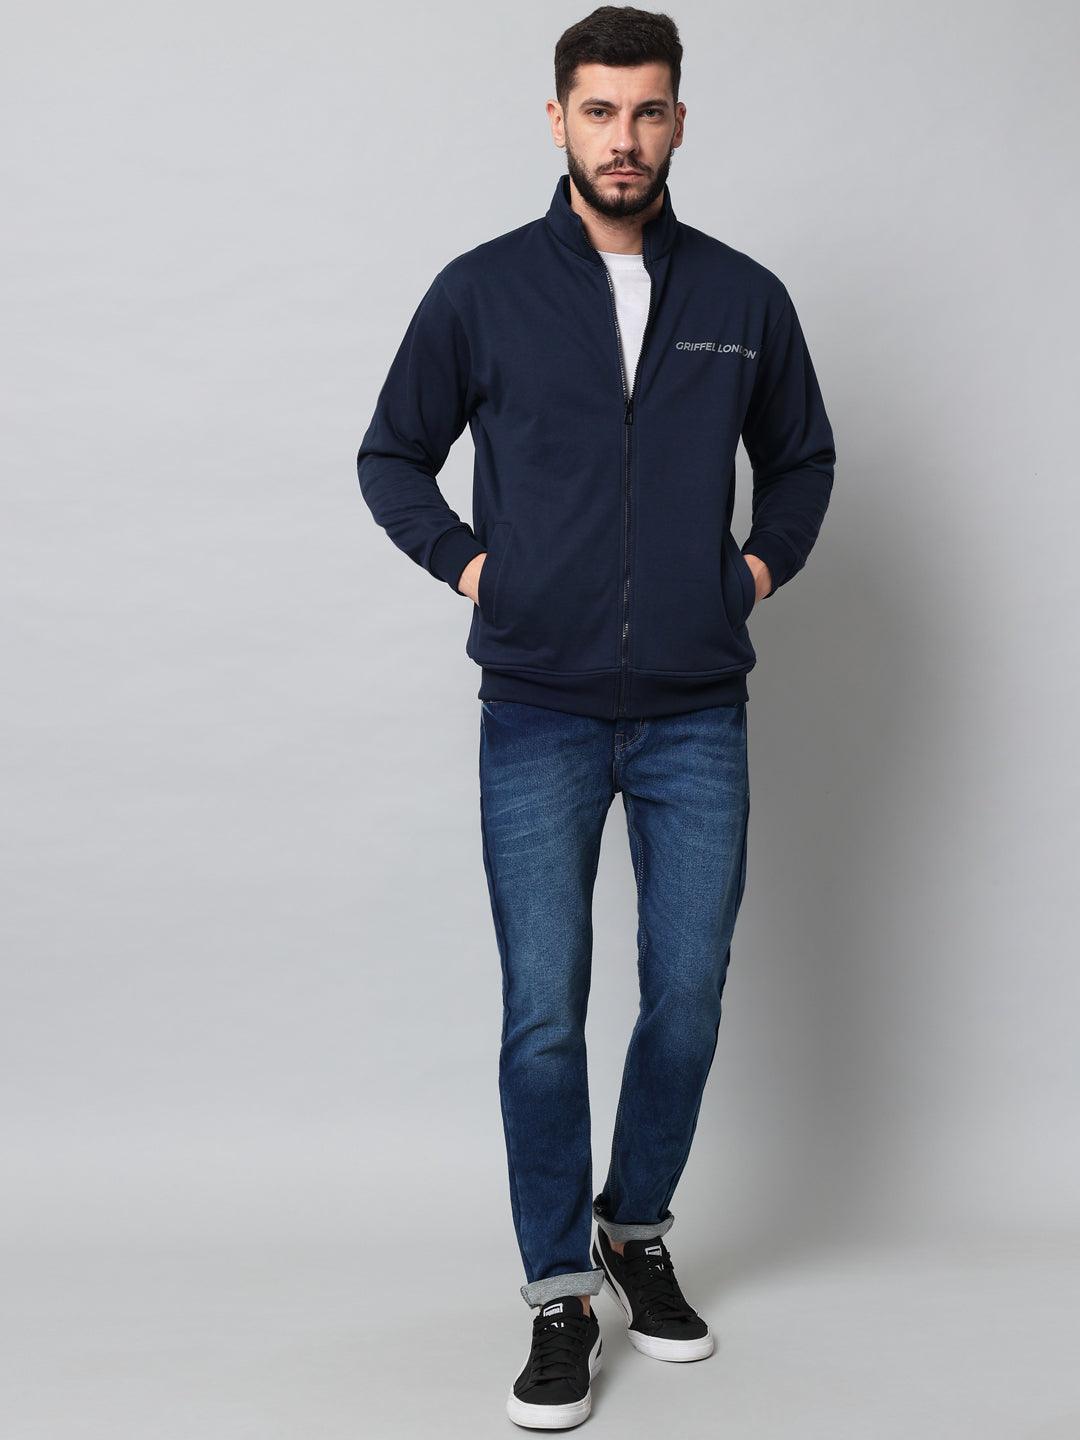 Griffel Men's Navy Cotton Fleece Zipper Sweatshirt with Long Sleeve and Front Logo Print - griffel